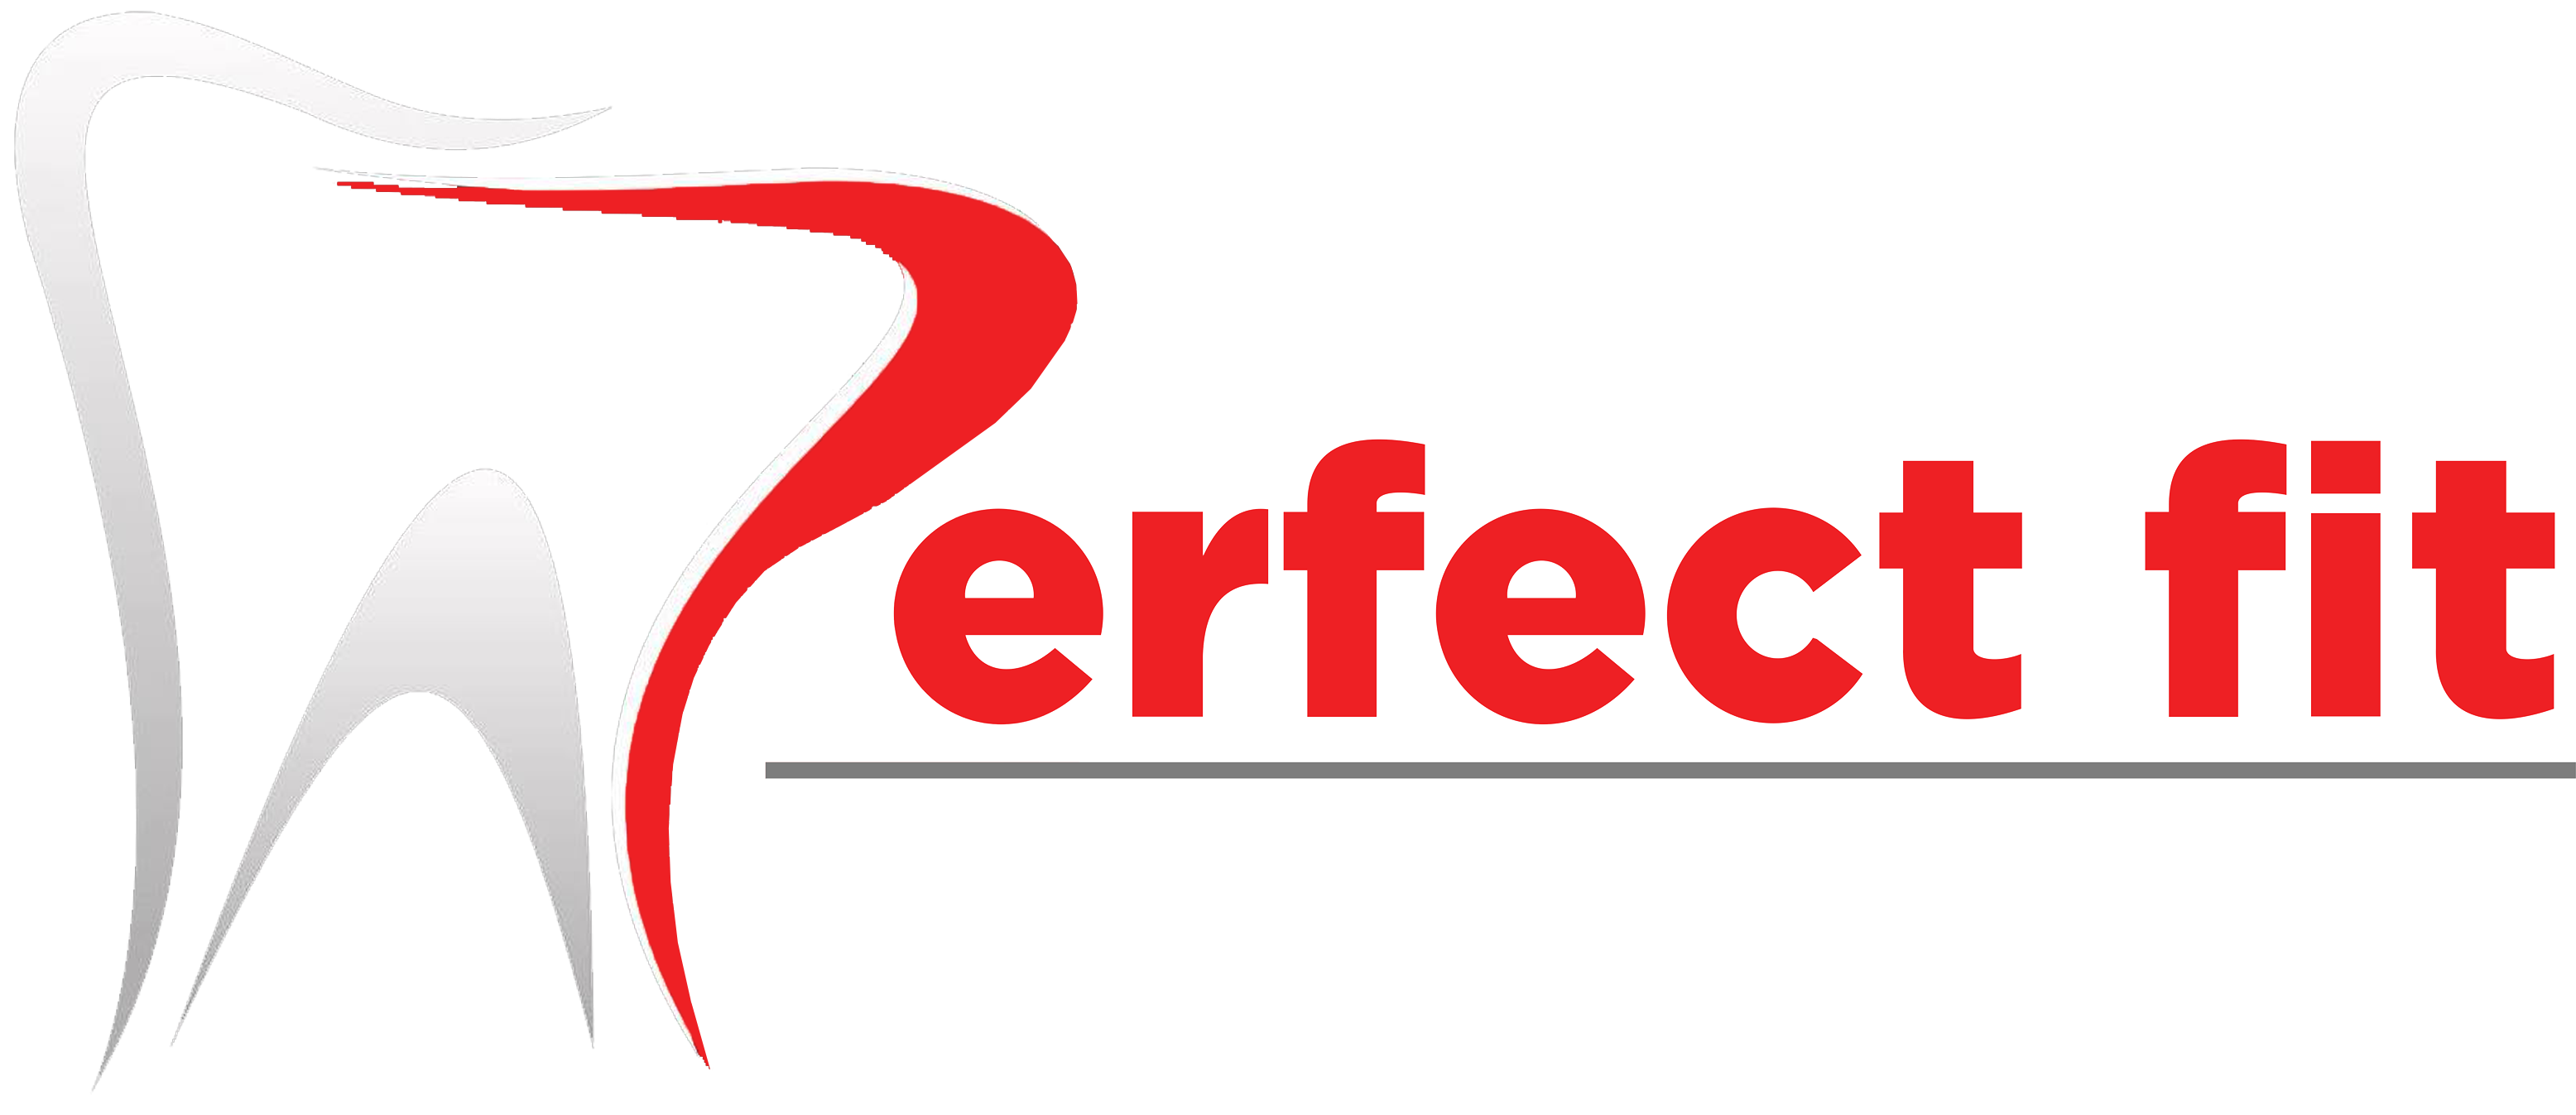 Perfectfit CAD/CAM Solution